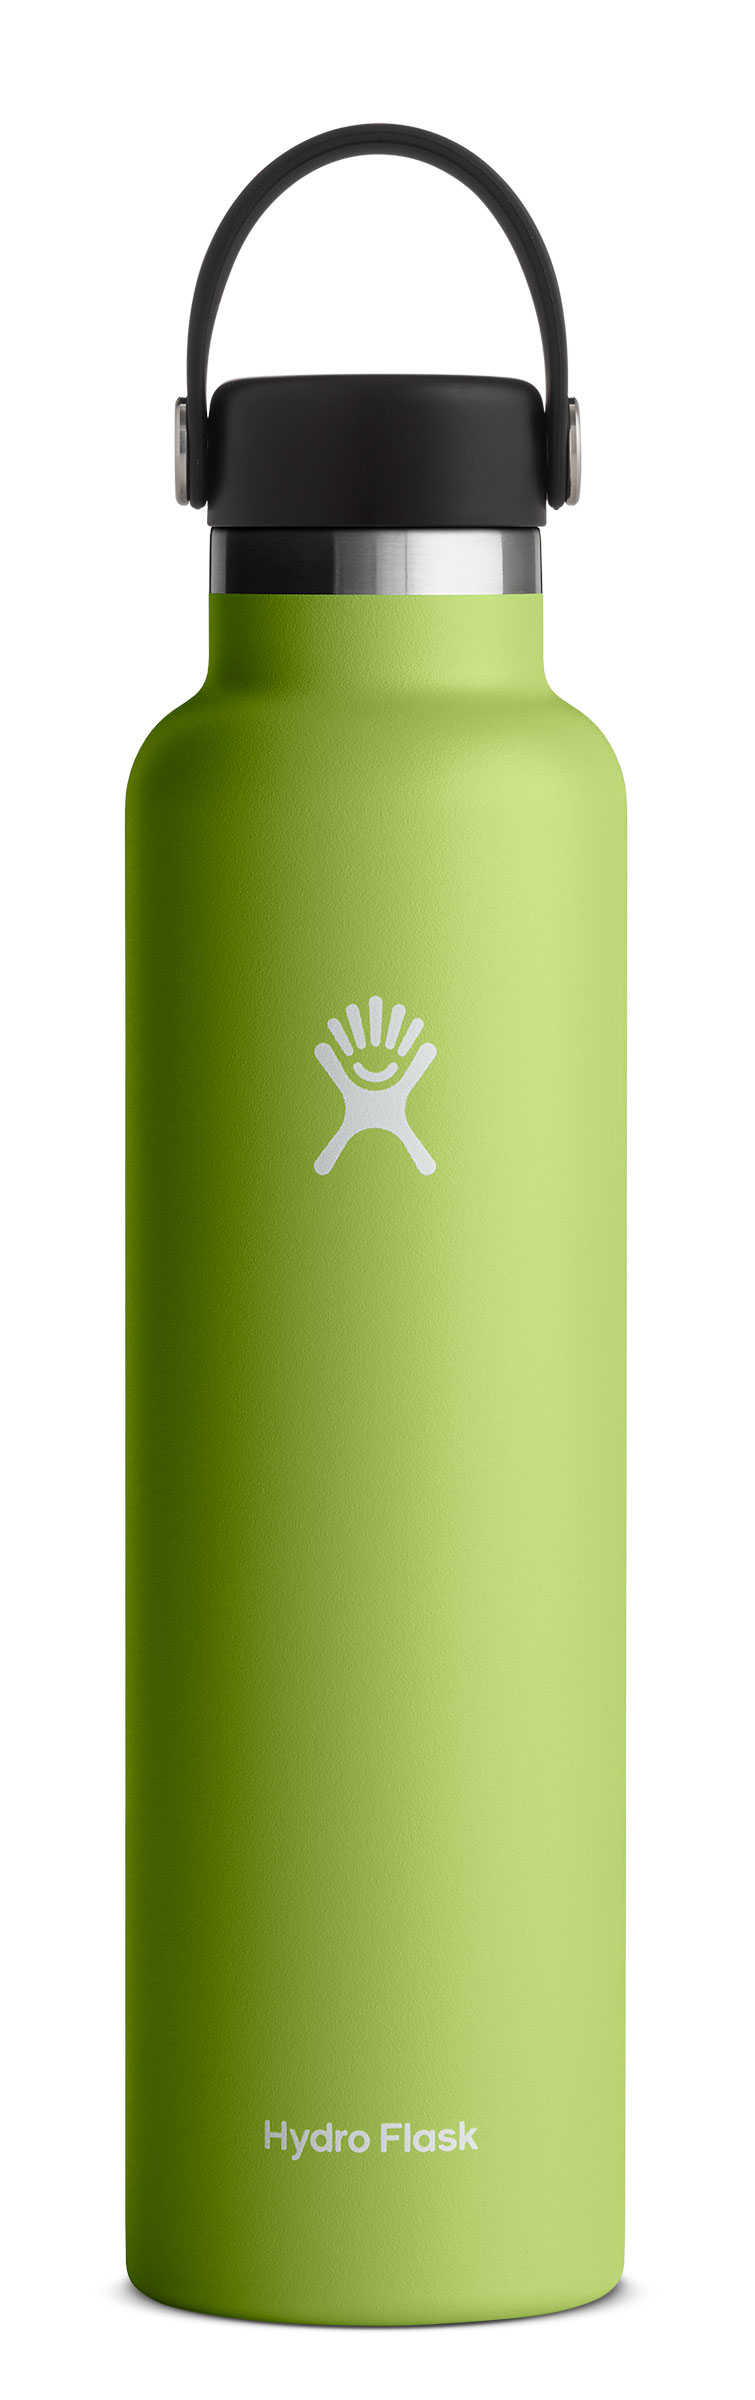 24 oz Hydro Flask with Straw Lid